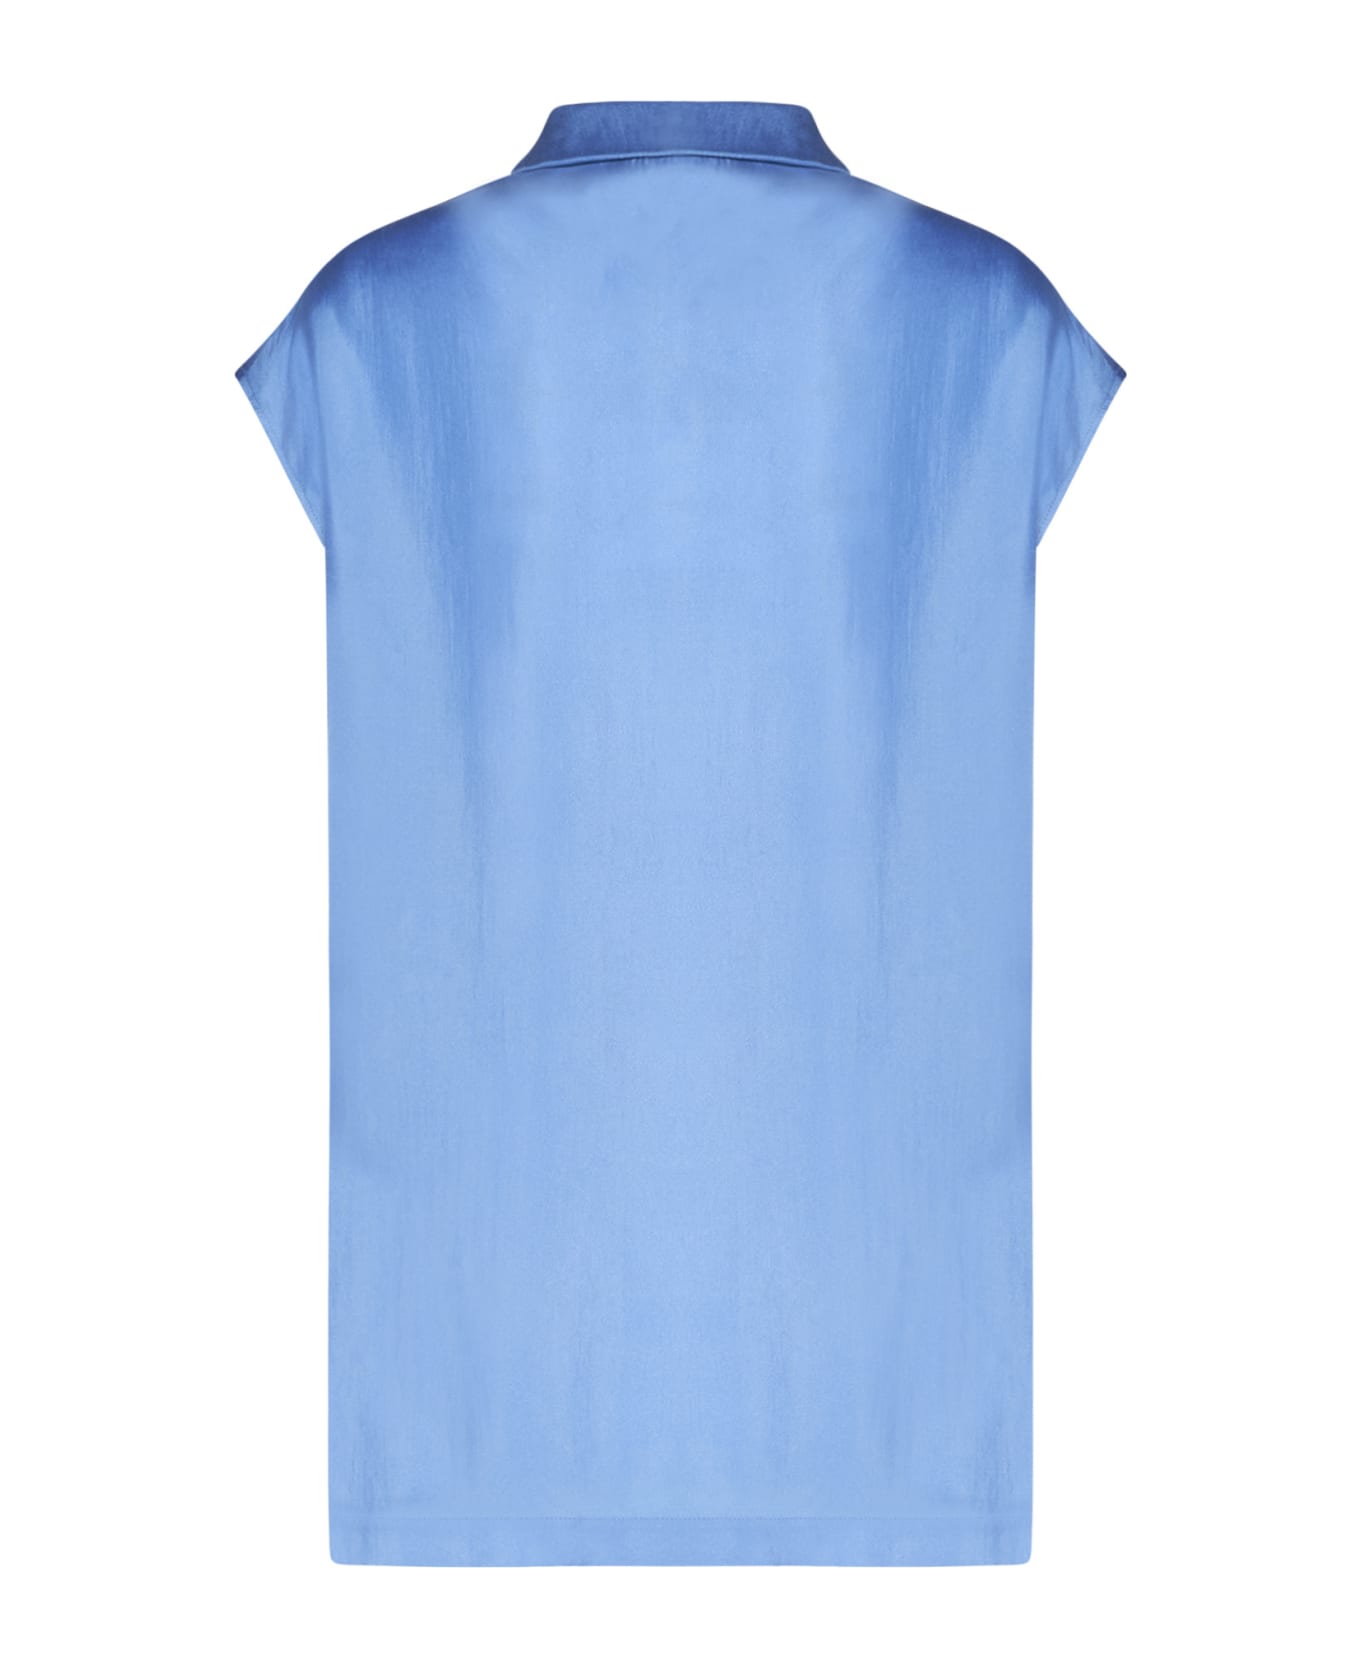 Alysi Shirt - Clear Blue